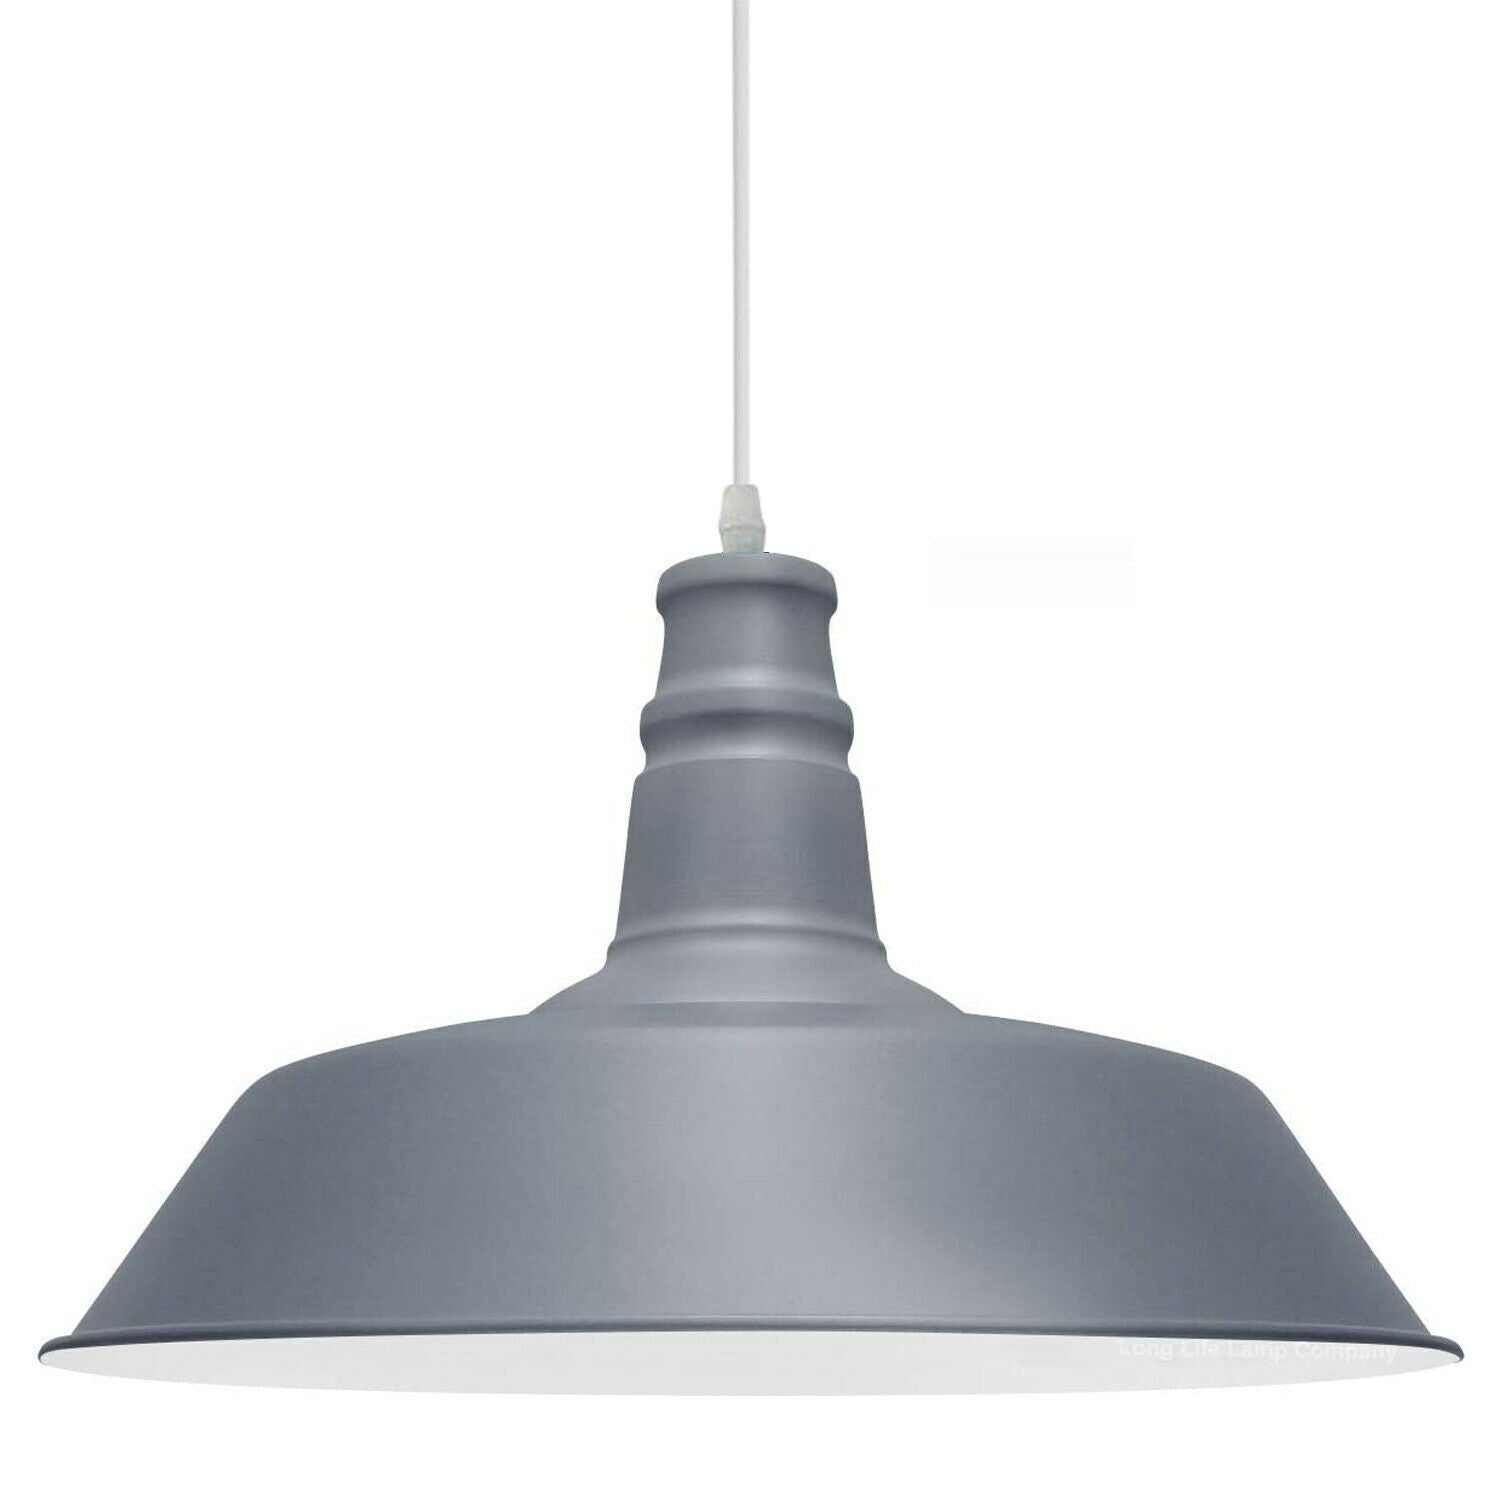 Hanging pendant Ceiling Lamp, Metal Light Shade Lighting UK E27 Decorate Height Adjustable Pendant Light and Kitchen